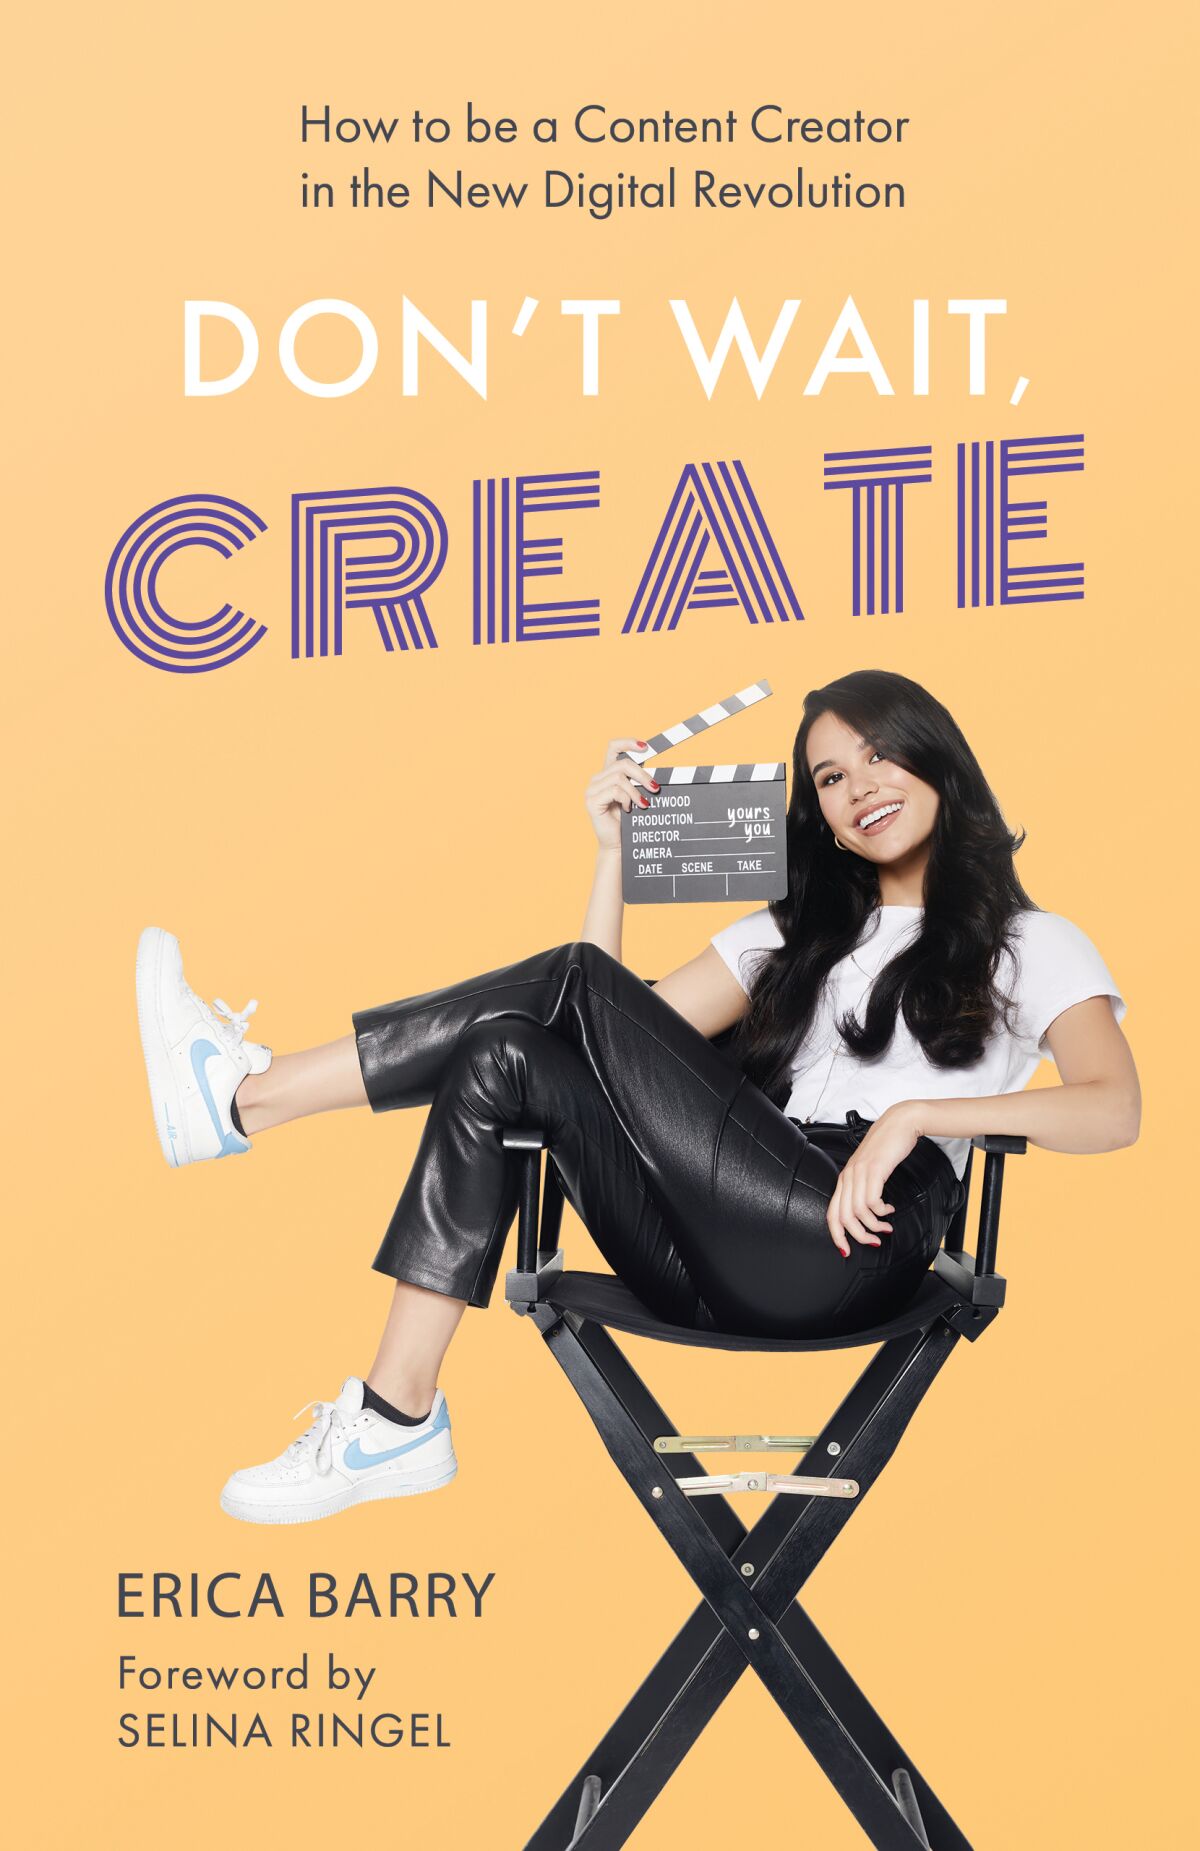 La Jolla native Erica Barry's debut book is “Don’t Wait, Create.”